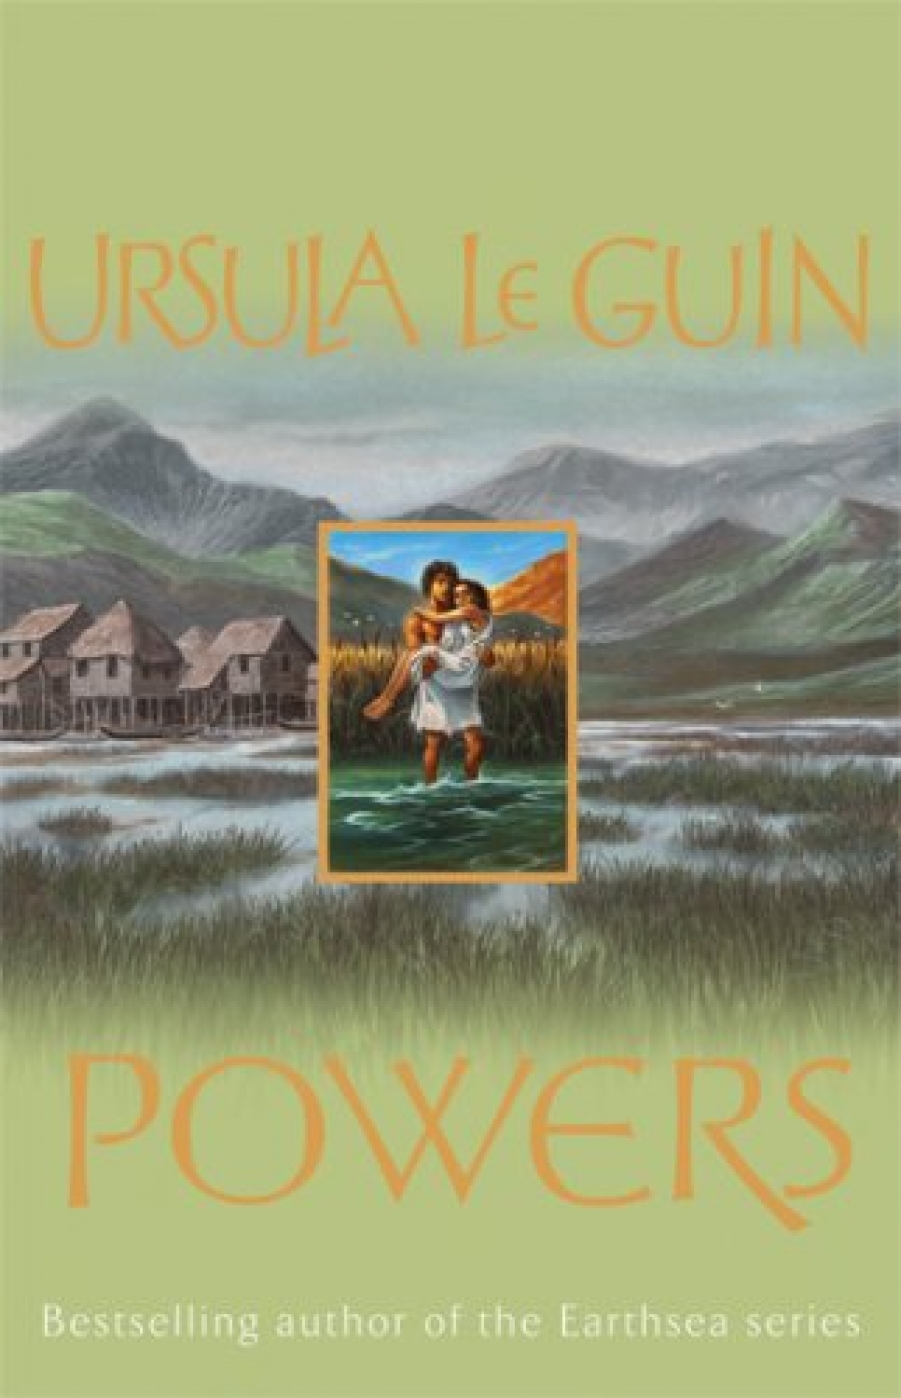 Le Guin, Ursula K. Powers 